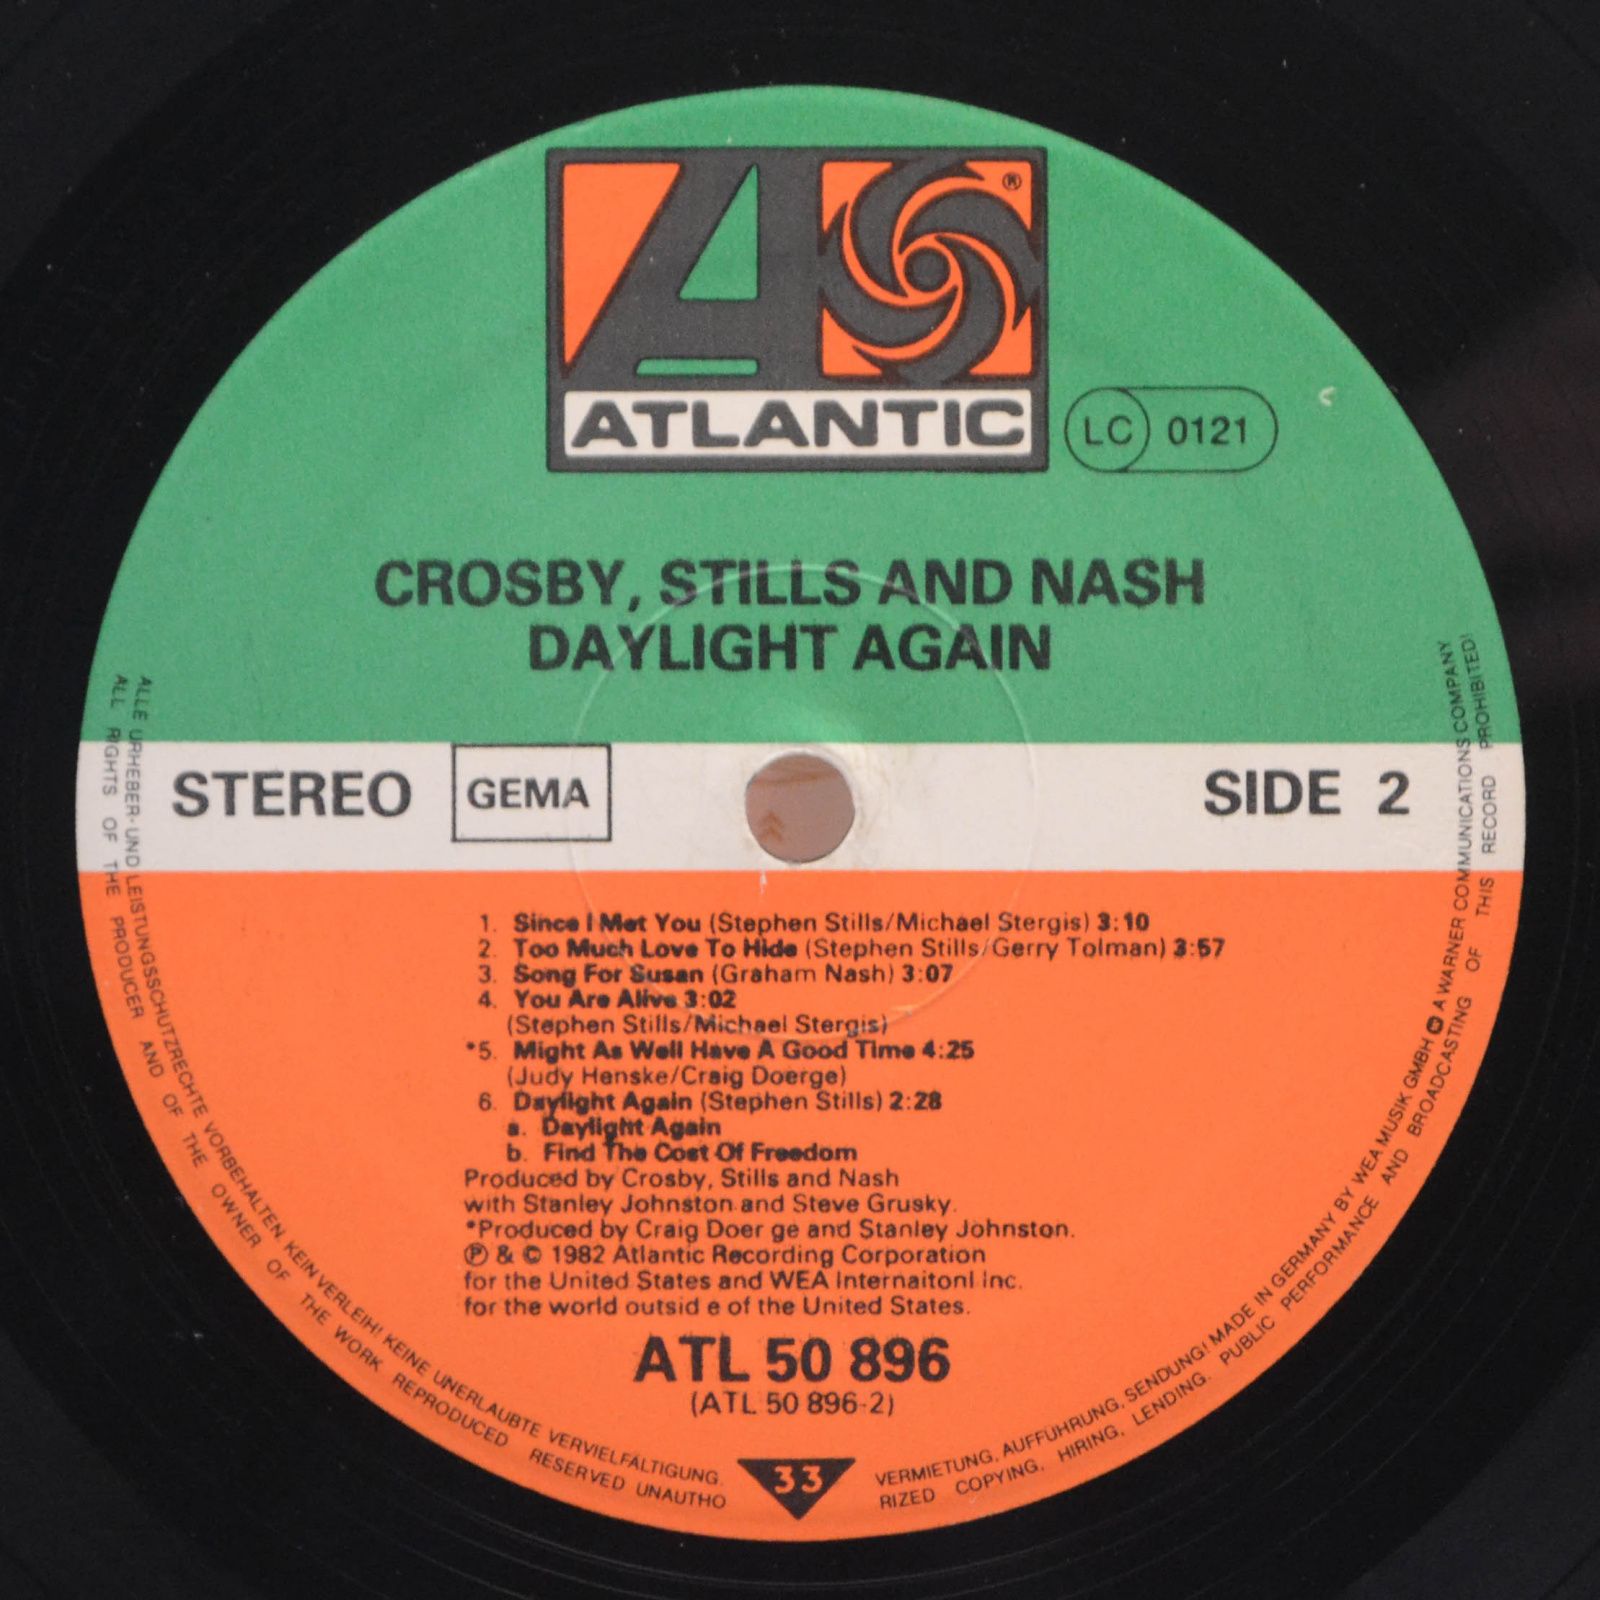 Crosby, Stills & Nash — Daylight Again, 1982